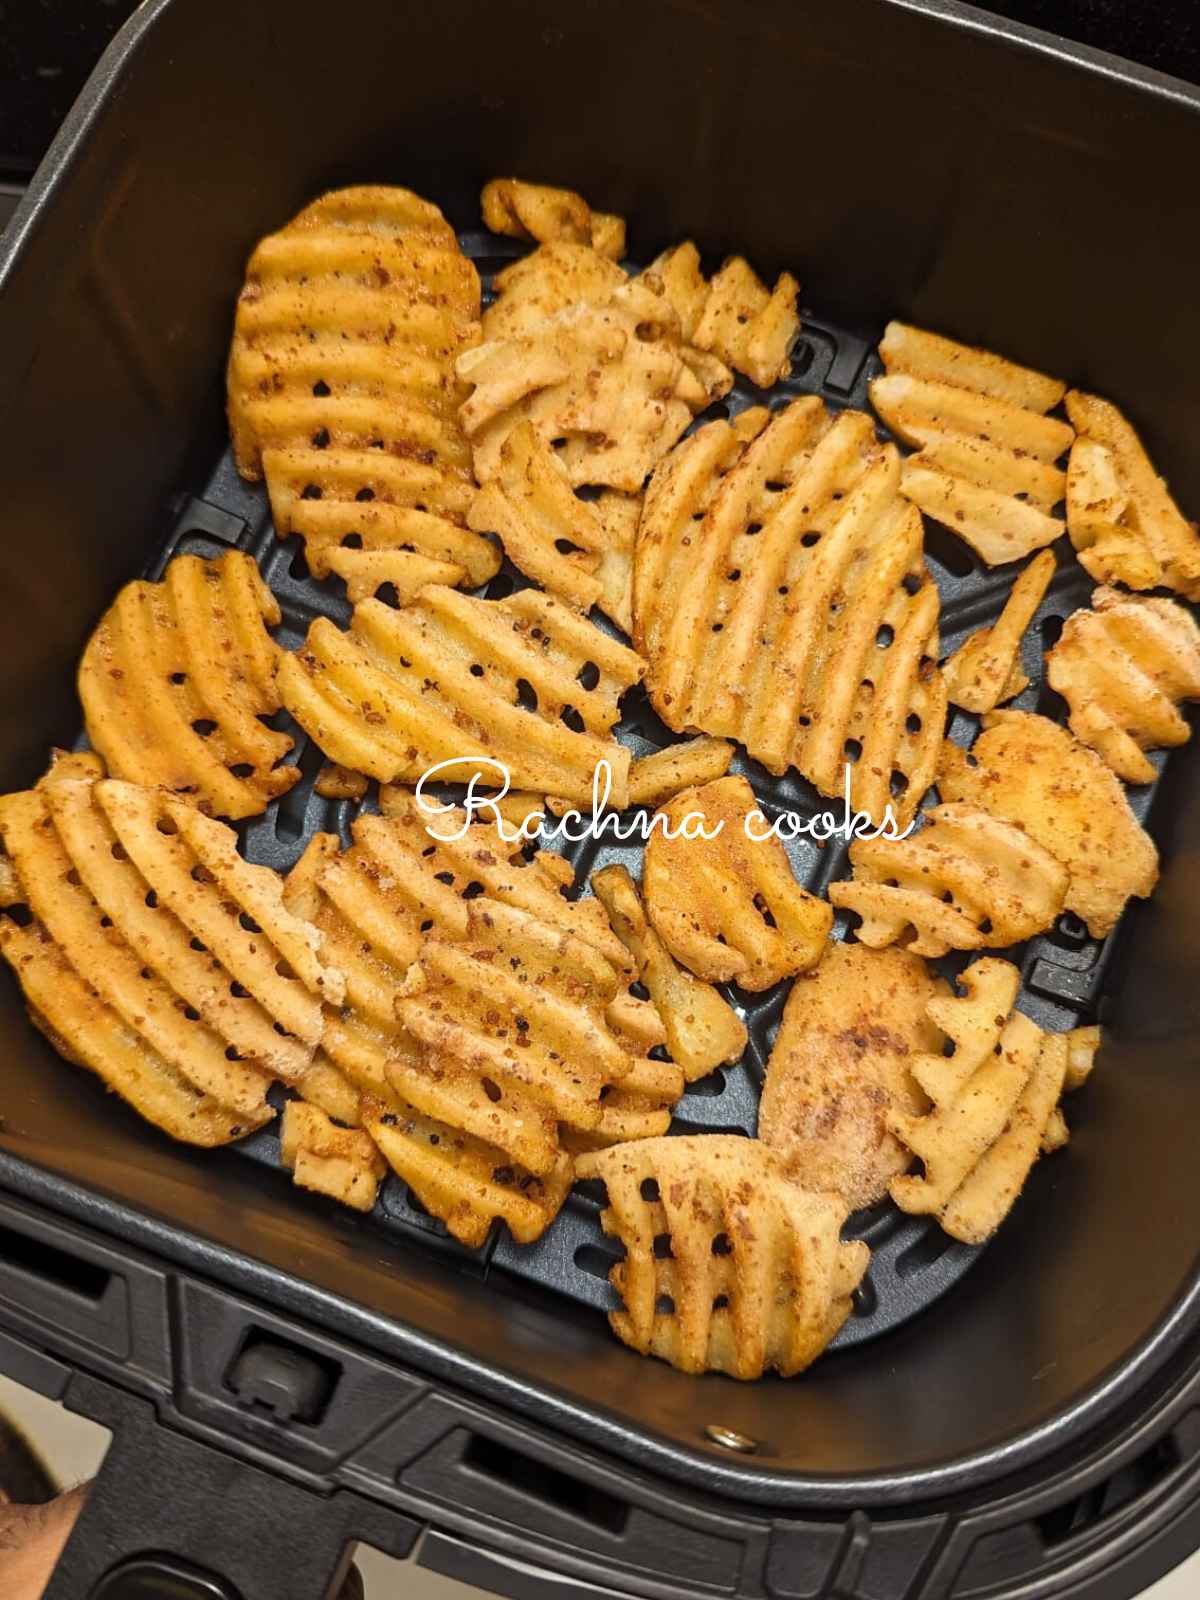 Frozen waffle fries placed in air fryer basket.